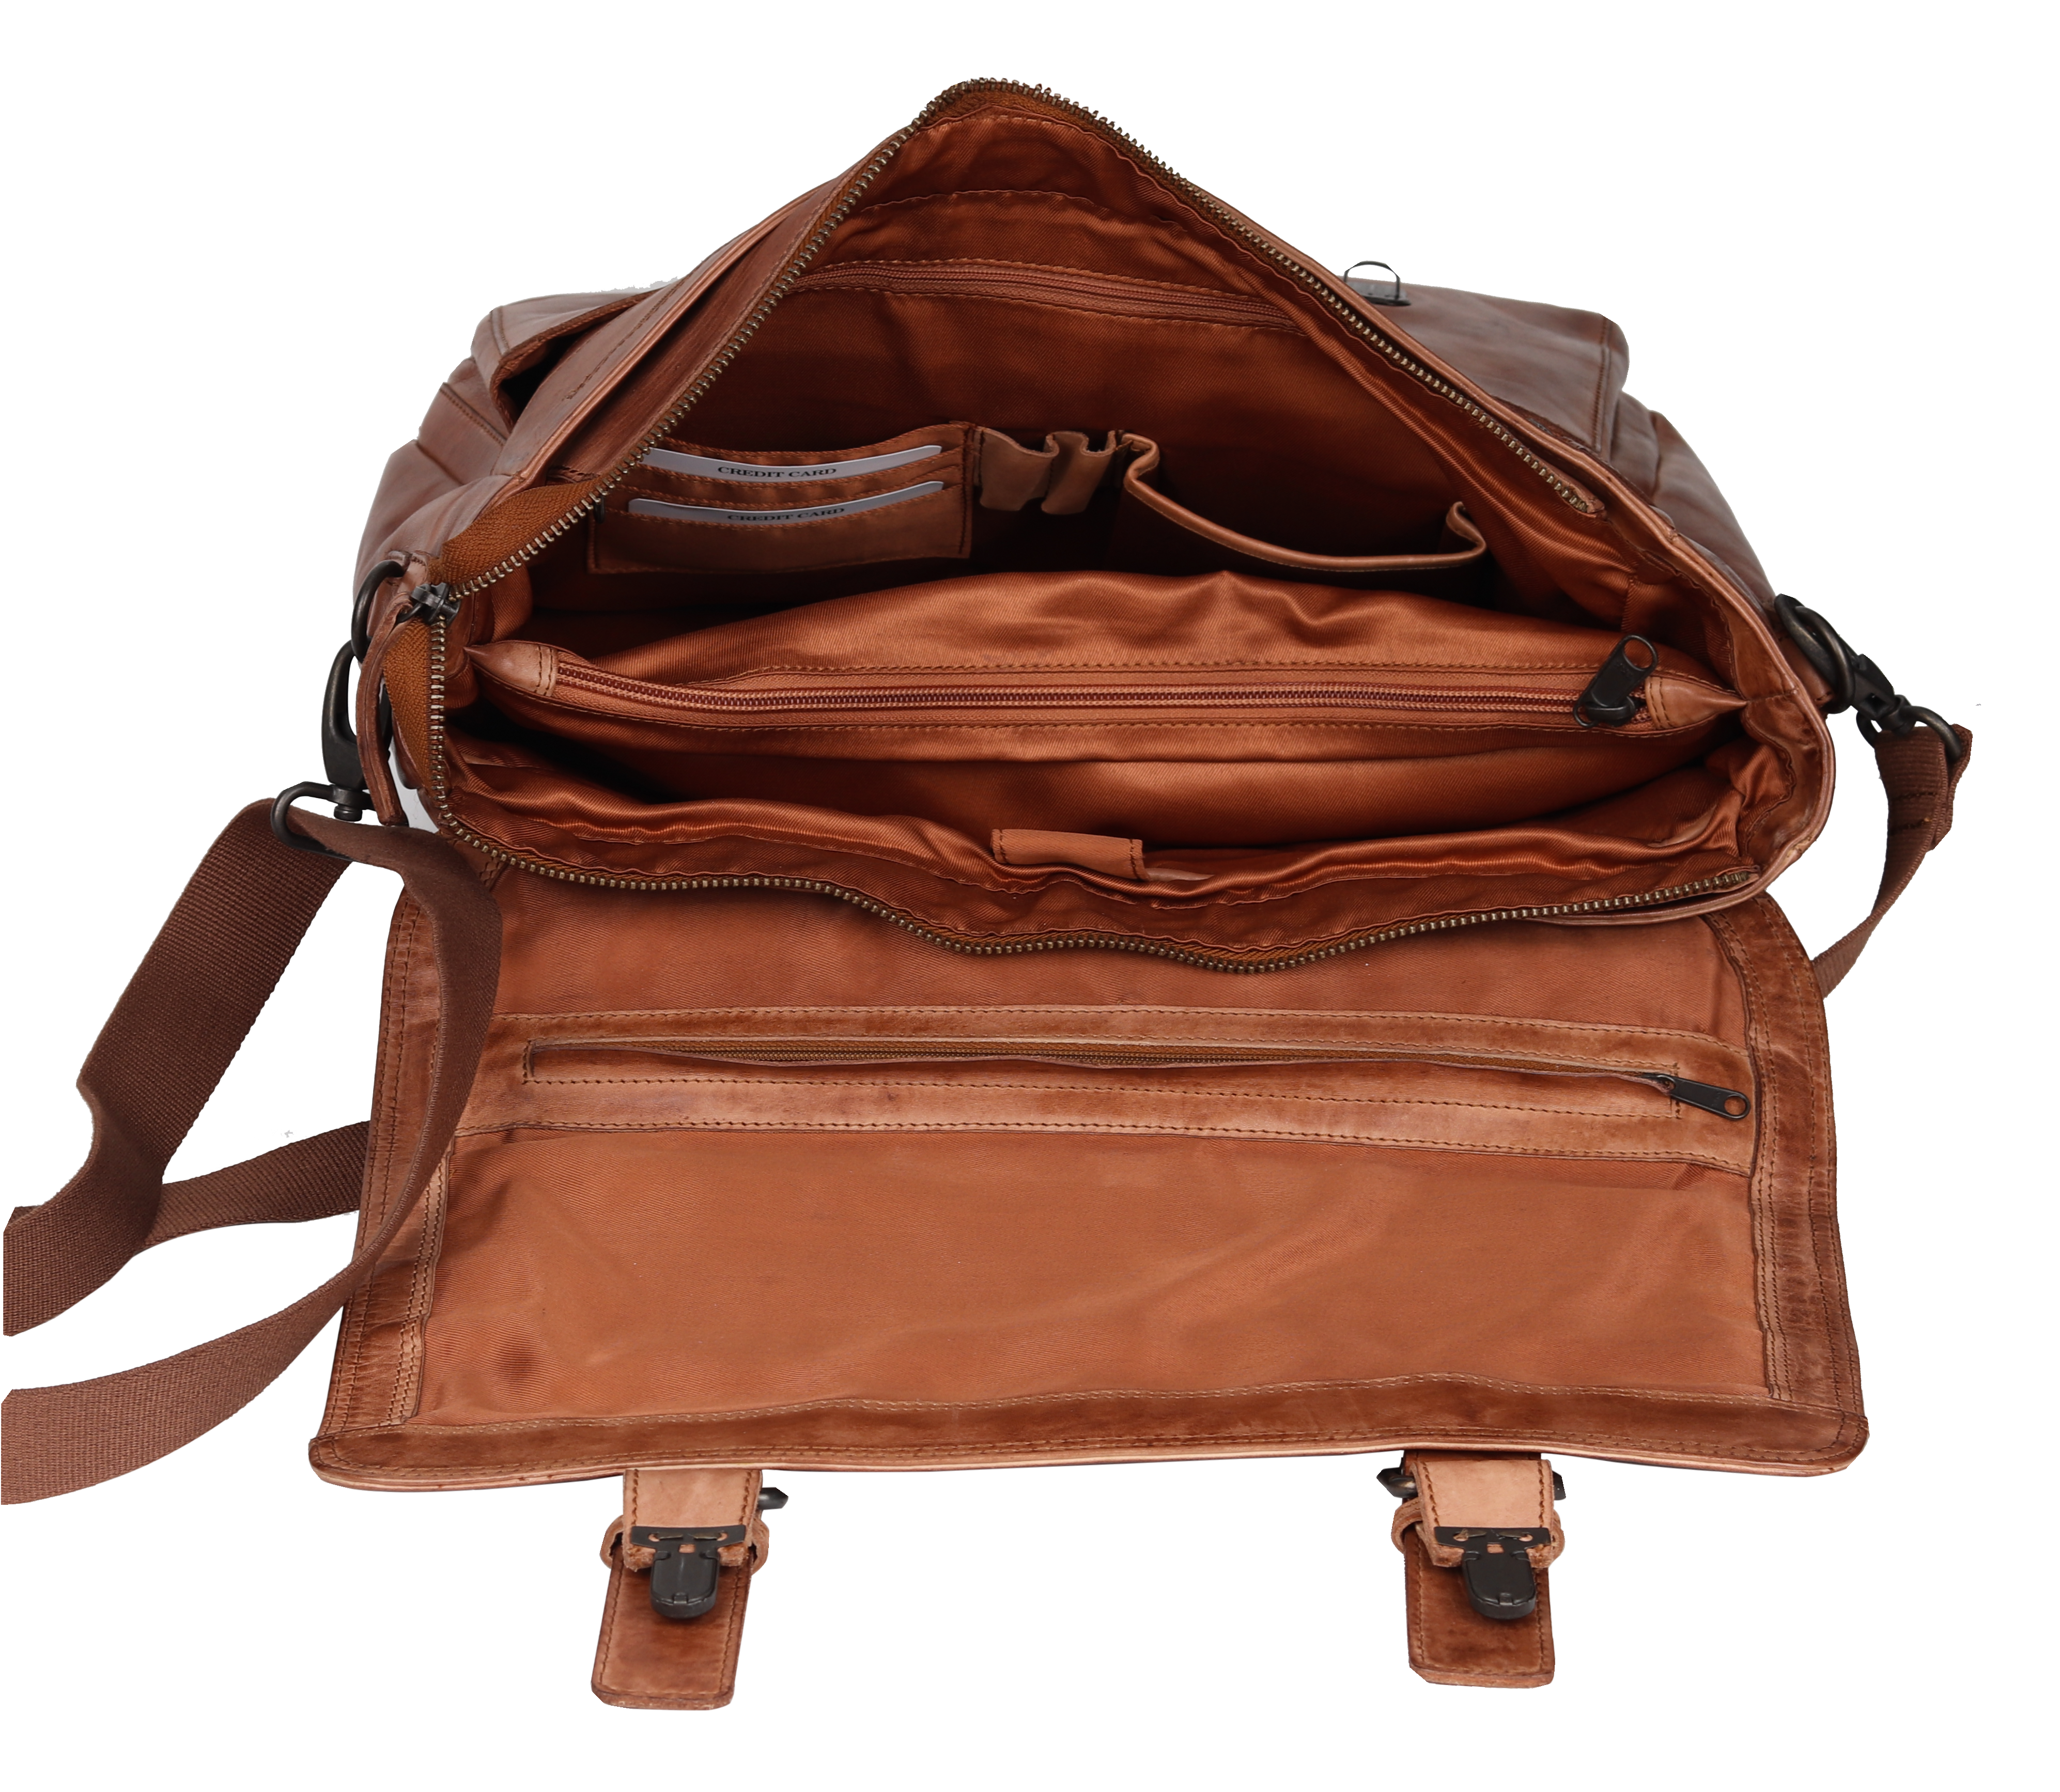 BOL/Open Road Messenger Laptop Leather Bag